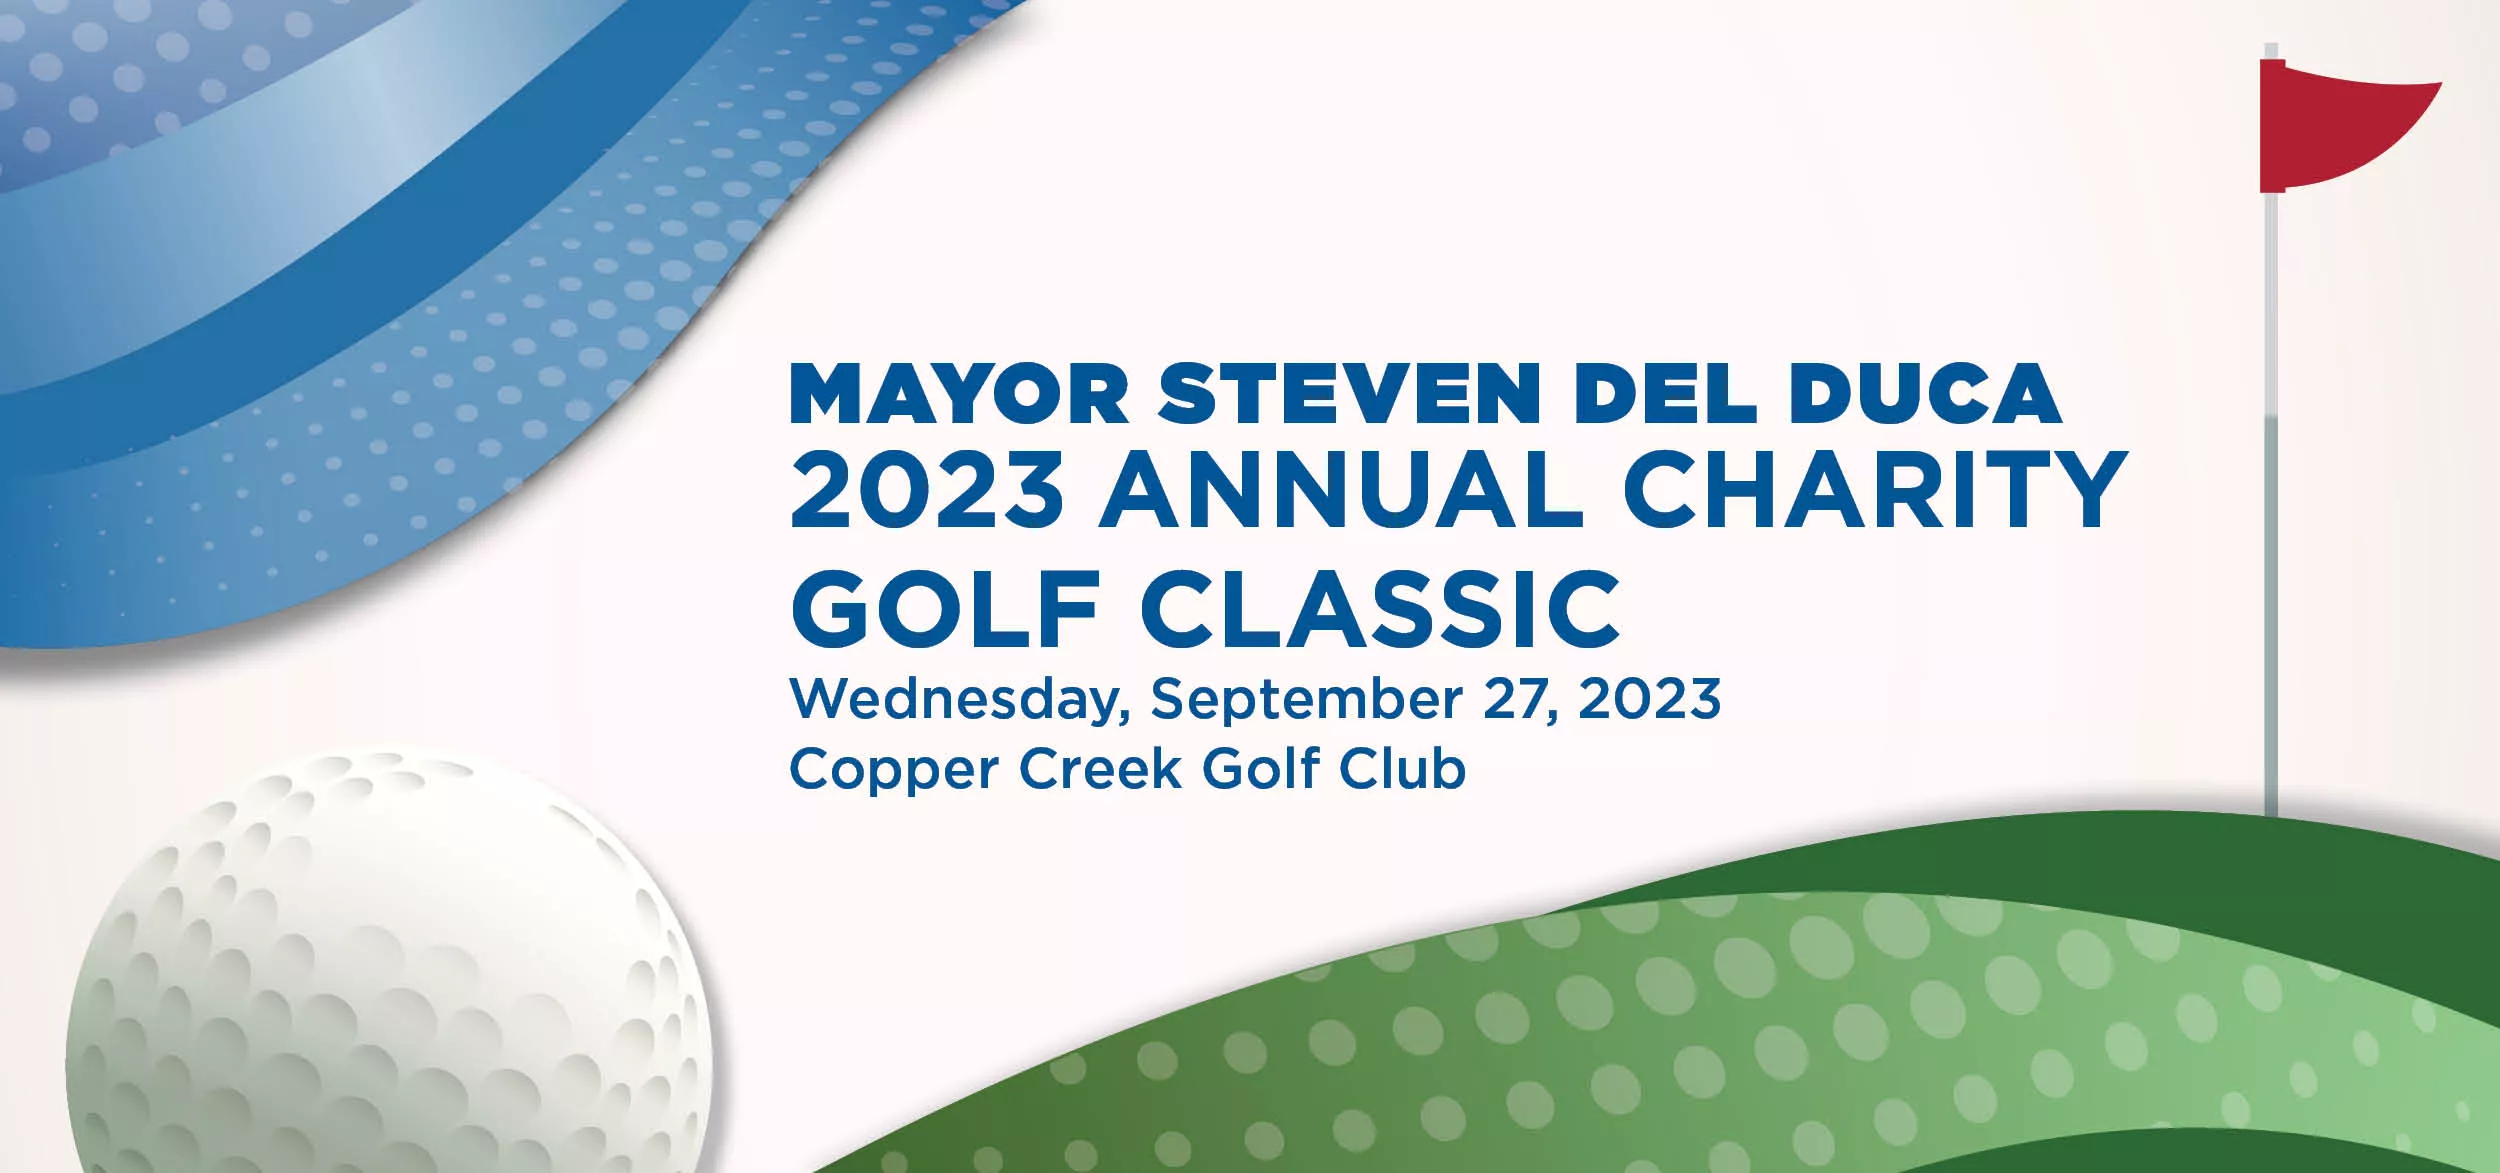 Mayor Steven Del Duca 2023 Annual Charity Golf Classic web banner